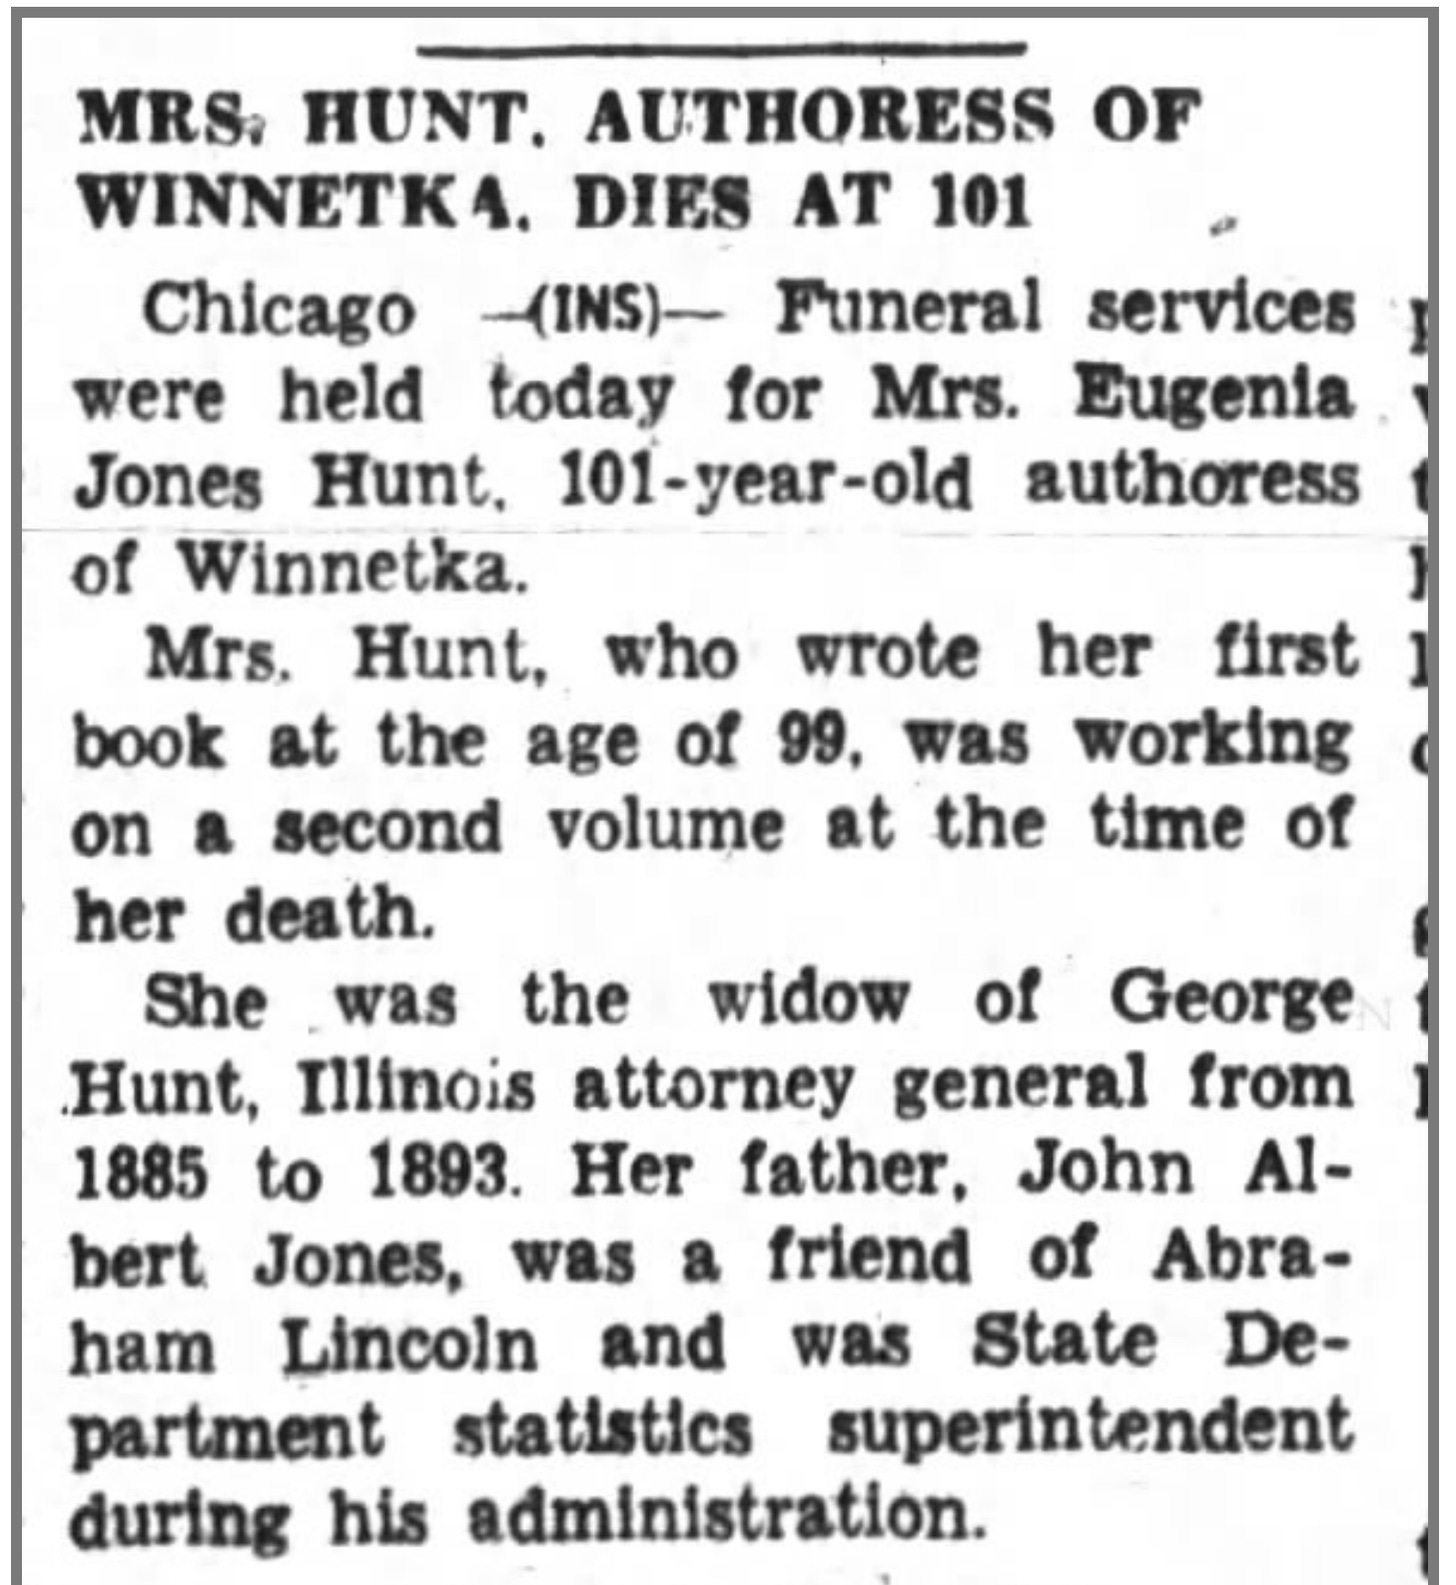 Article from Journal Gazette (Mattoon, Illinois), November 3, 1947 with headline Mrs. Hunt Authoress from Winnetka Dies at 101